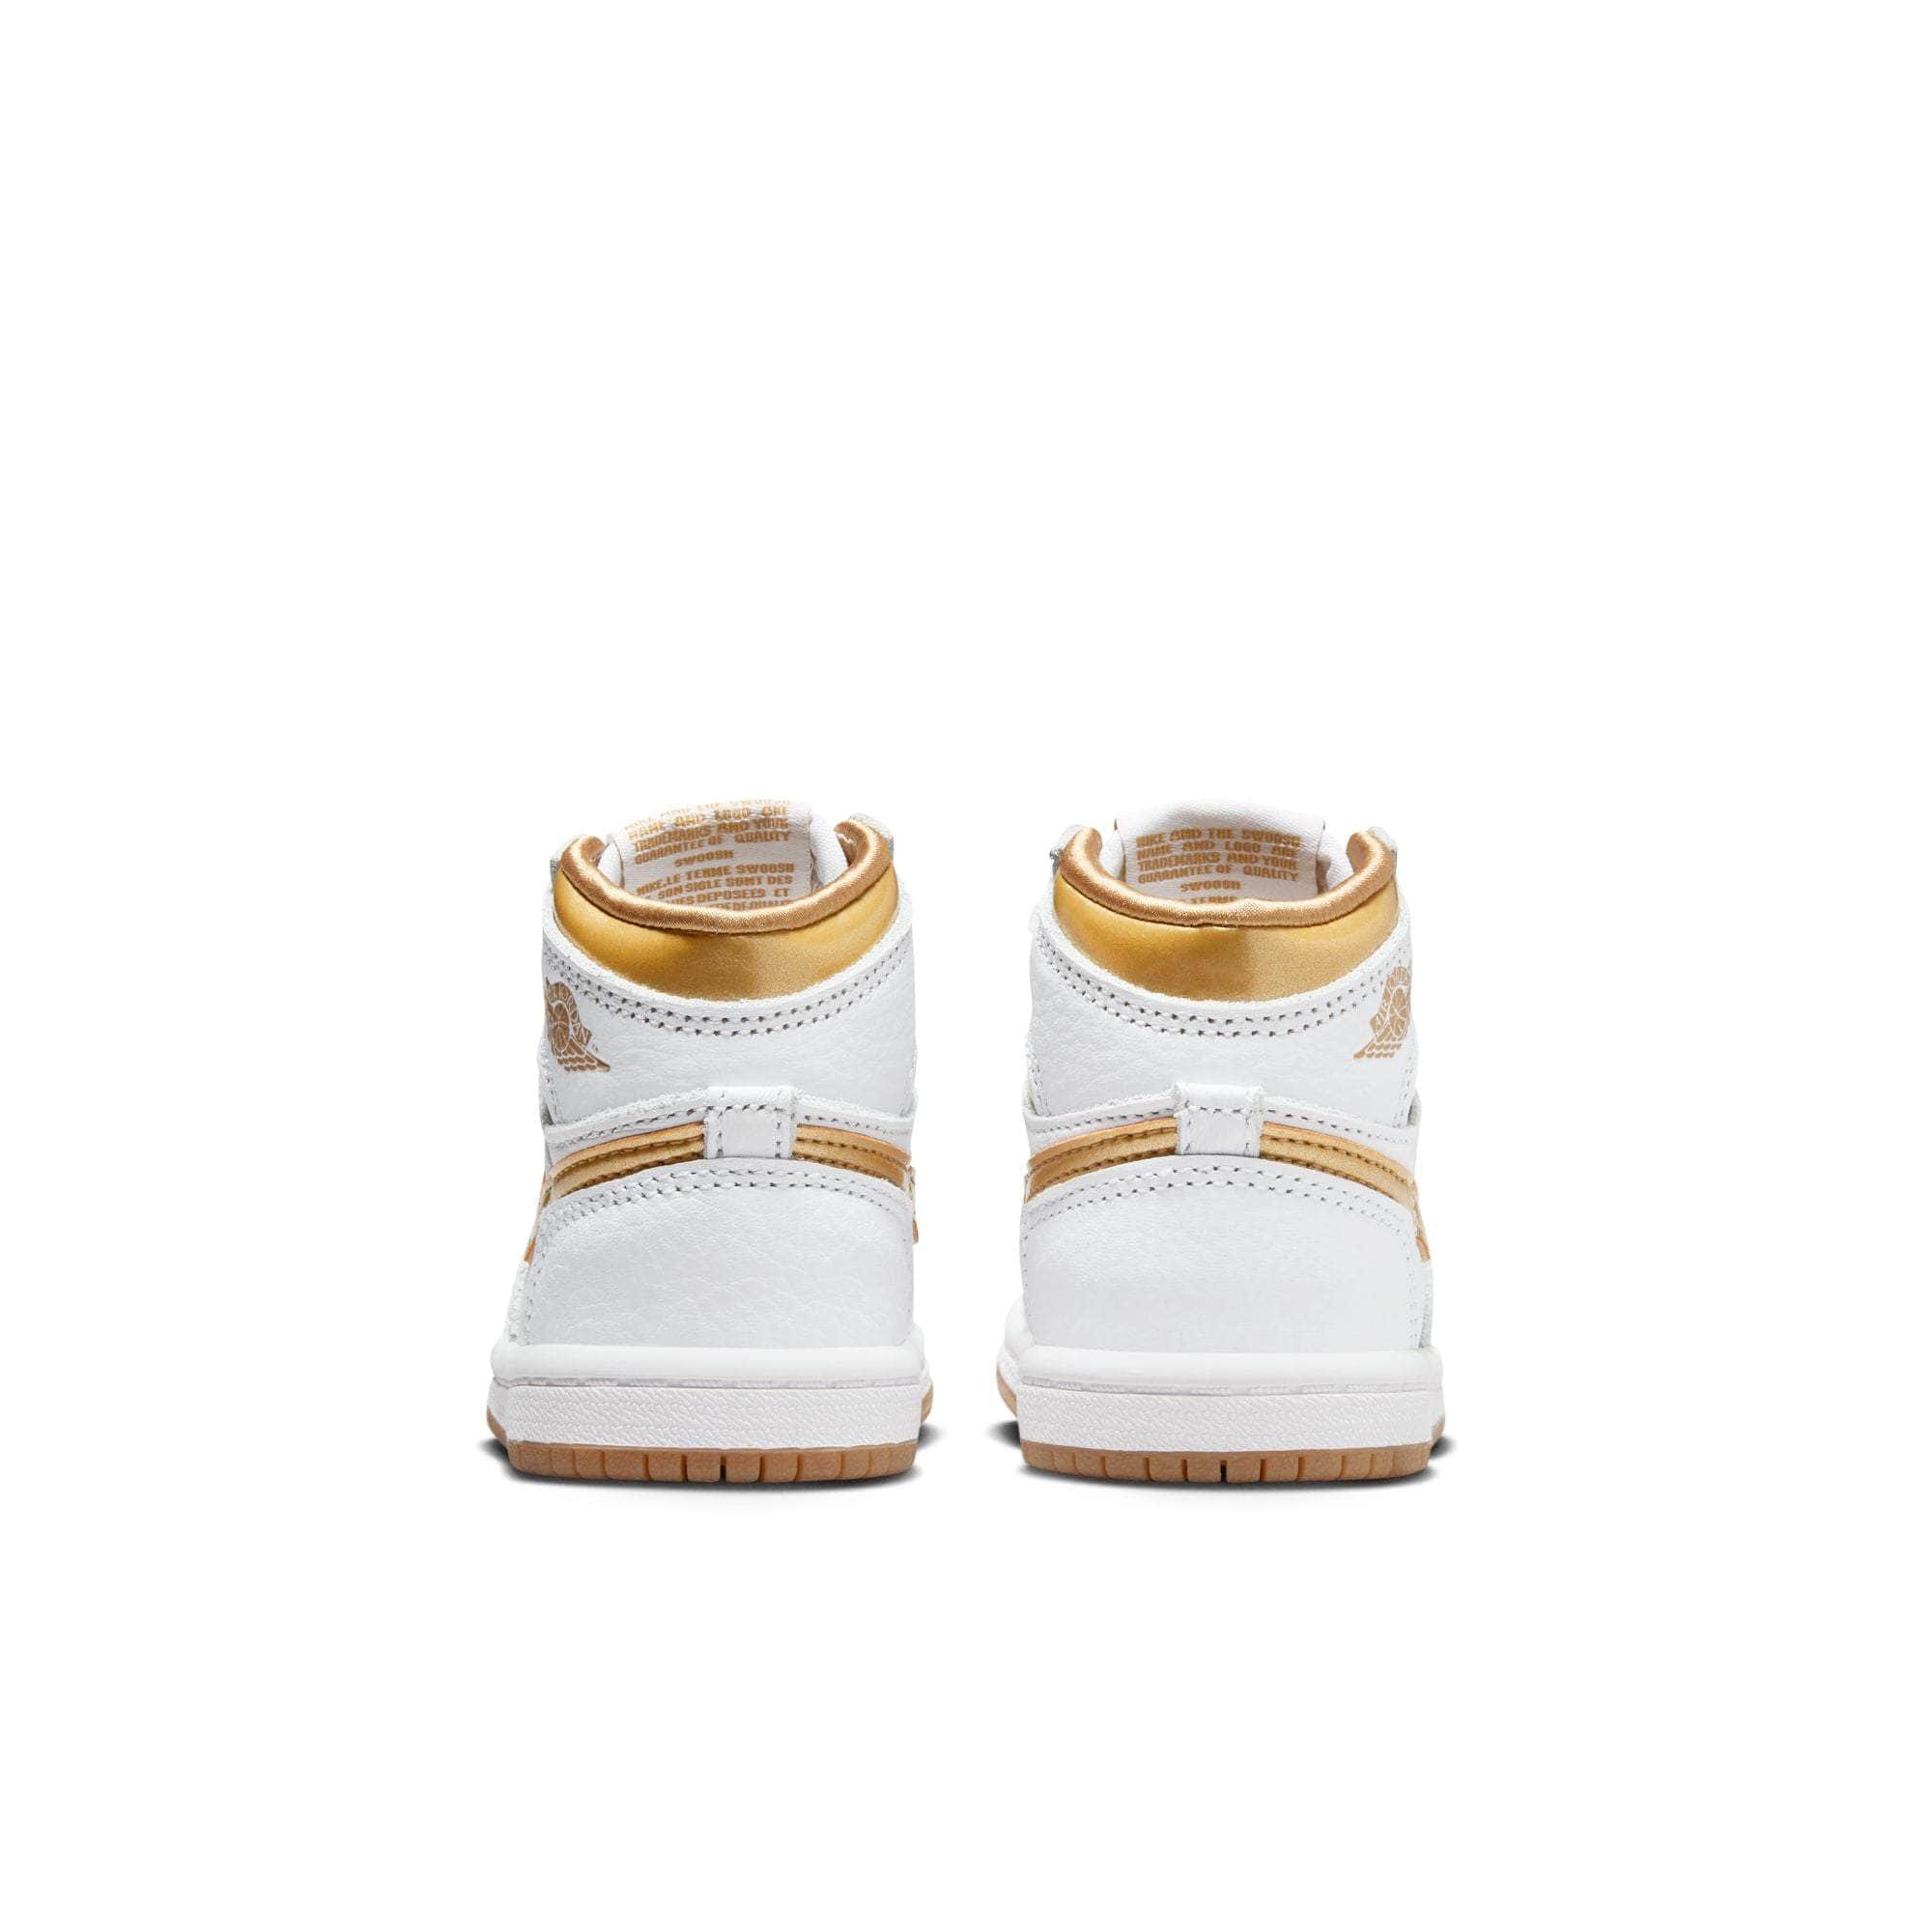 Air Jordan Footwear Air Jordan 1 High OG “Metallic Gold” - Toddler's TD